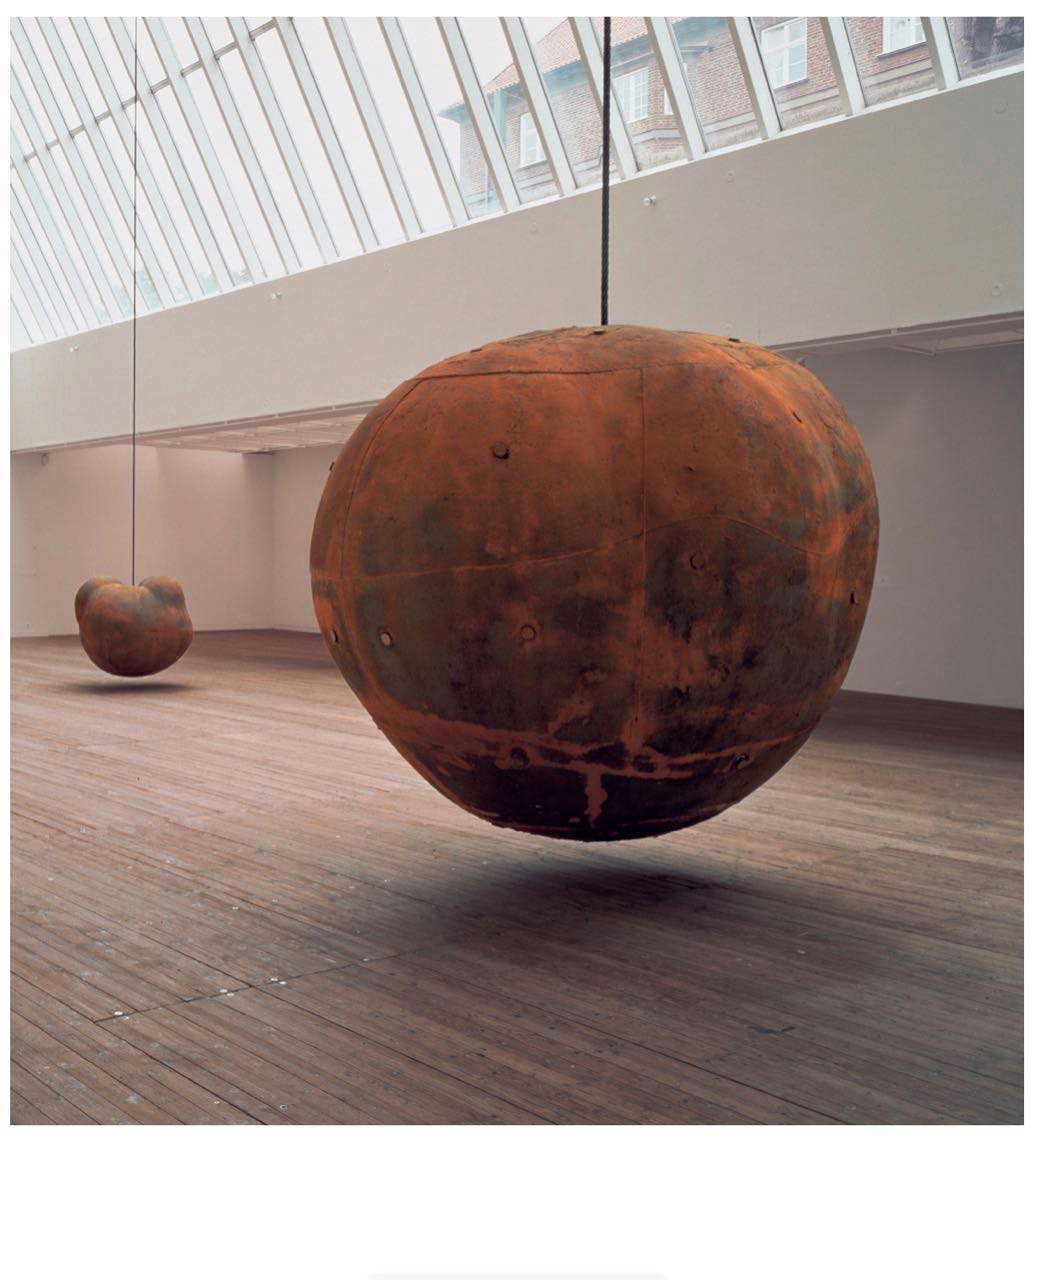 Antony Gormley, Royal Academy, Art, Sculpture, London, installation